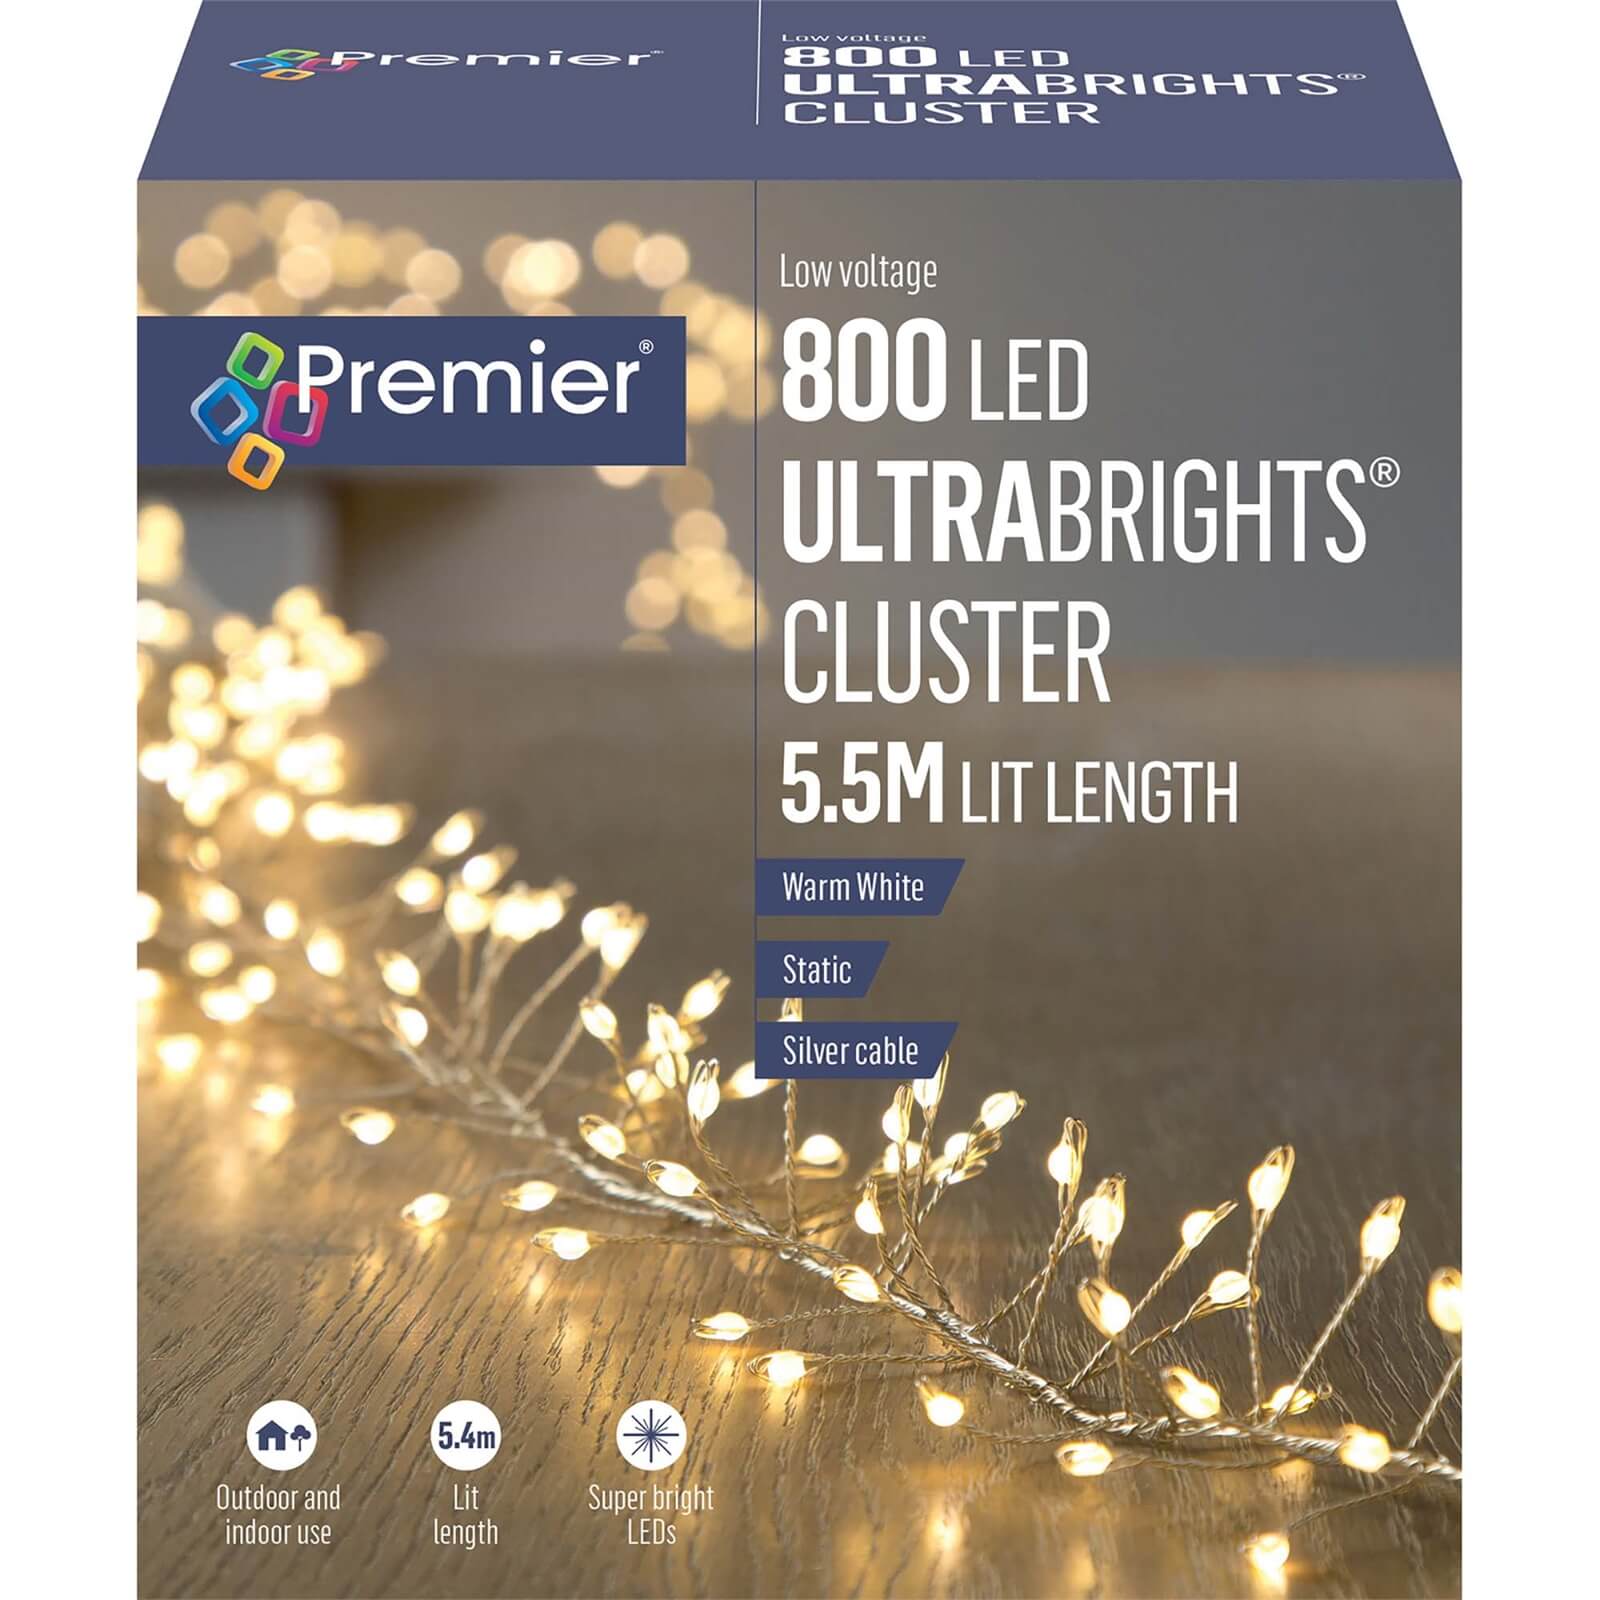 5.5M 800L Ultrabright Cluster Warm White LED Lights